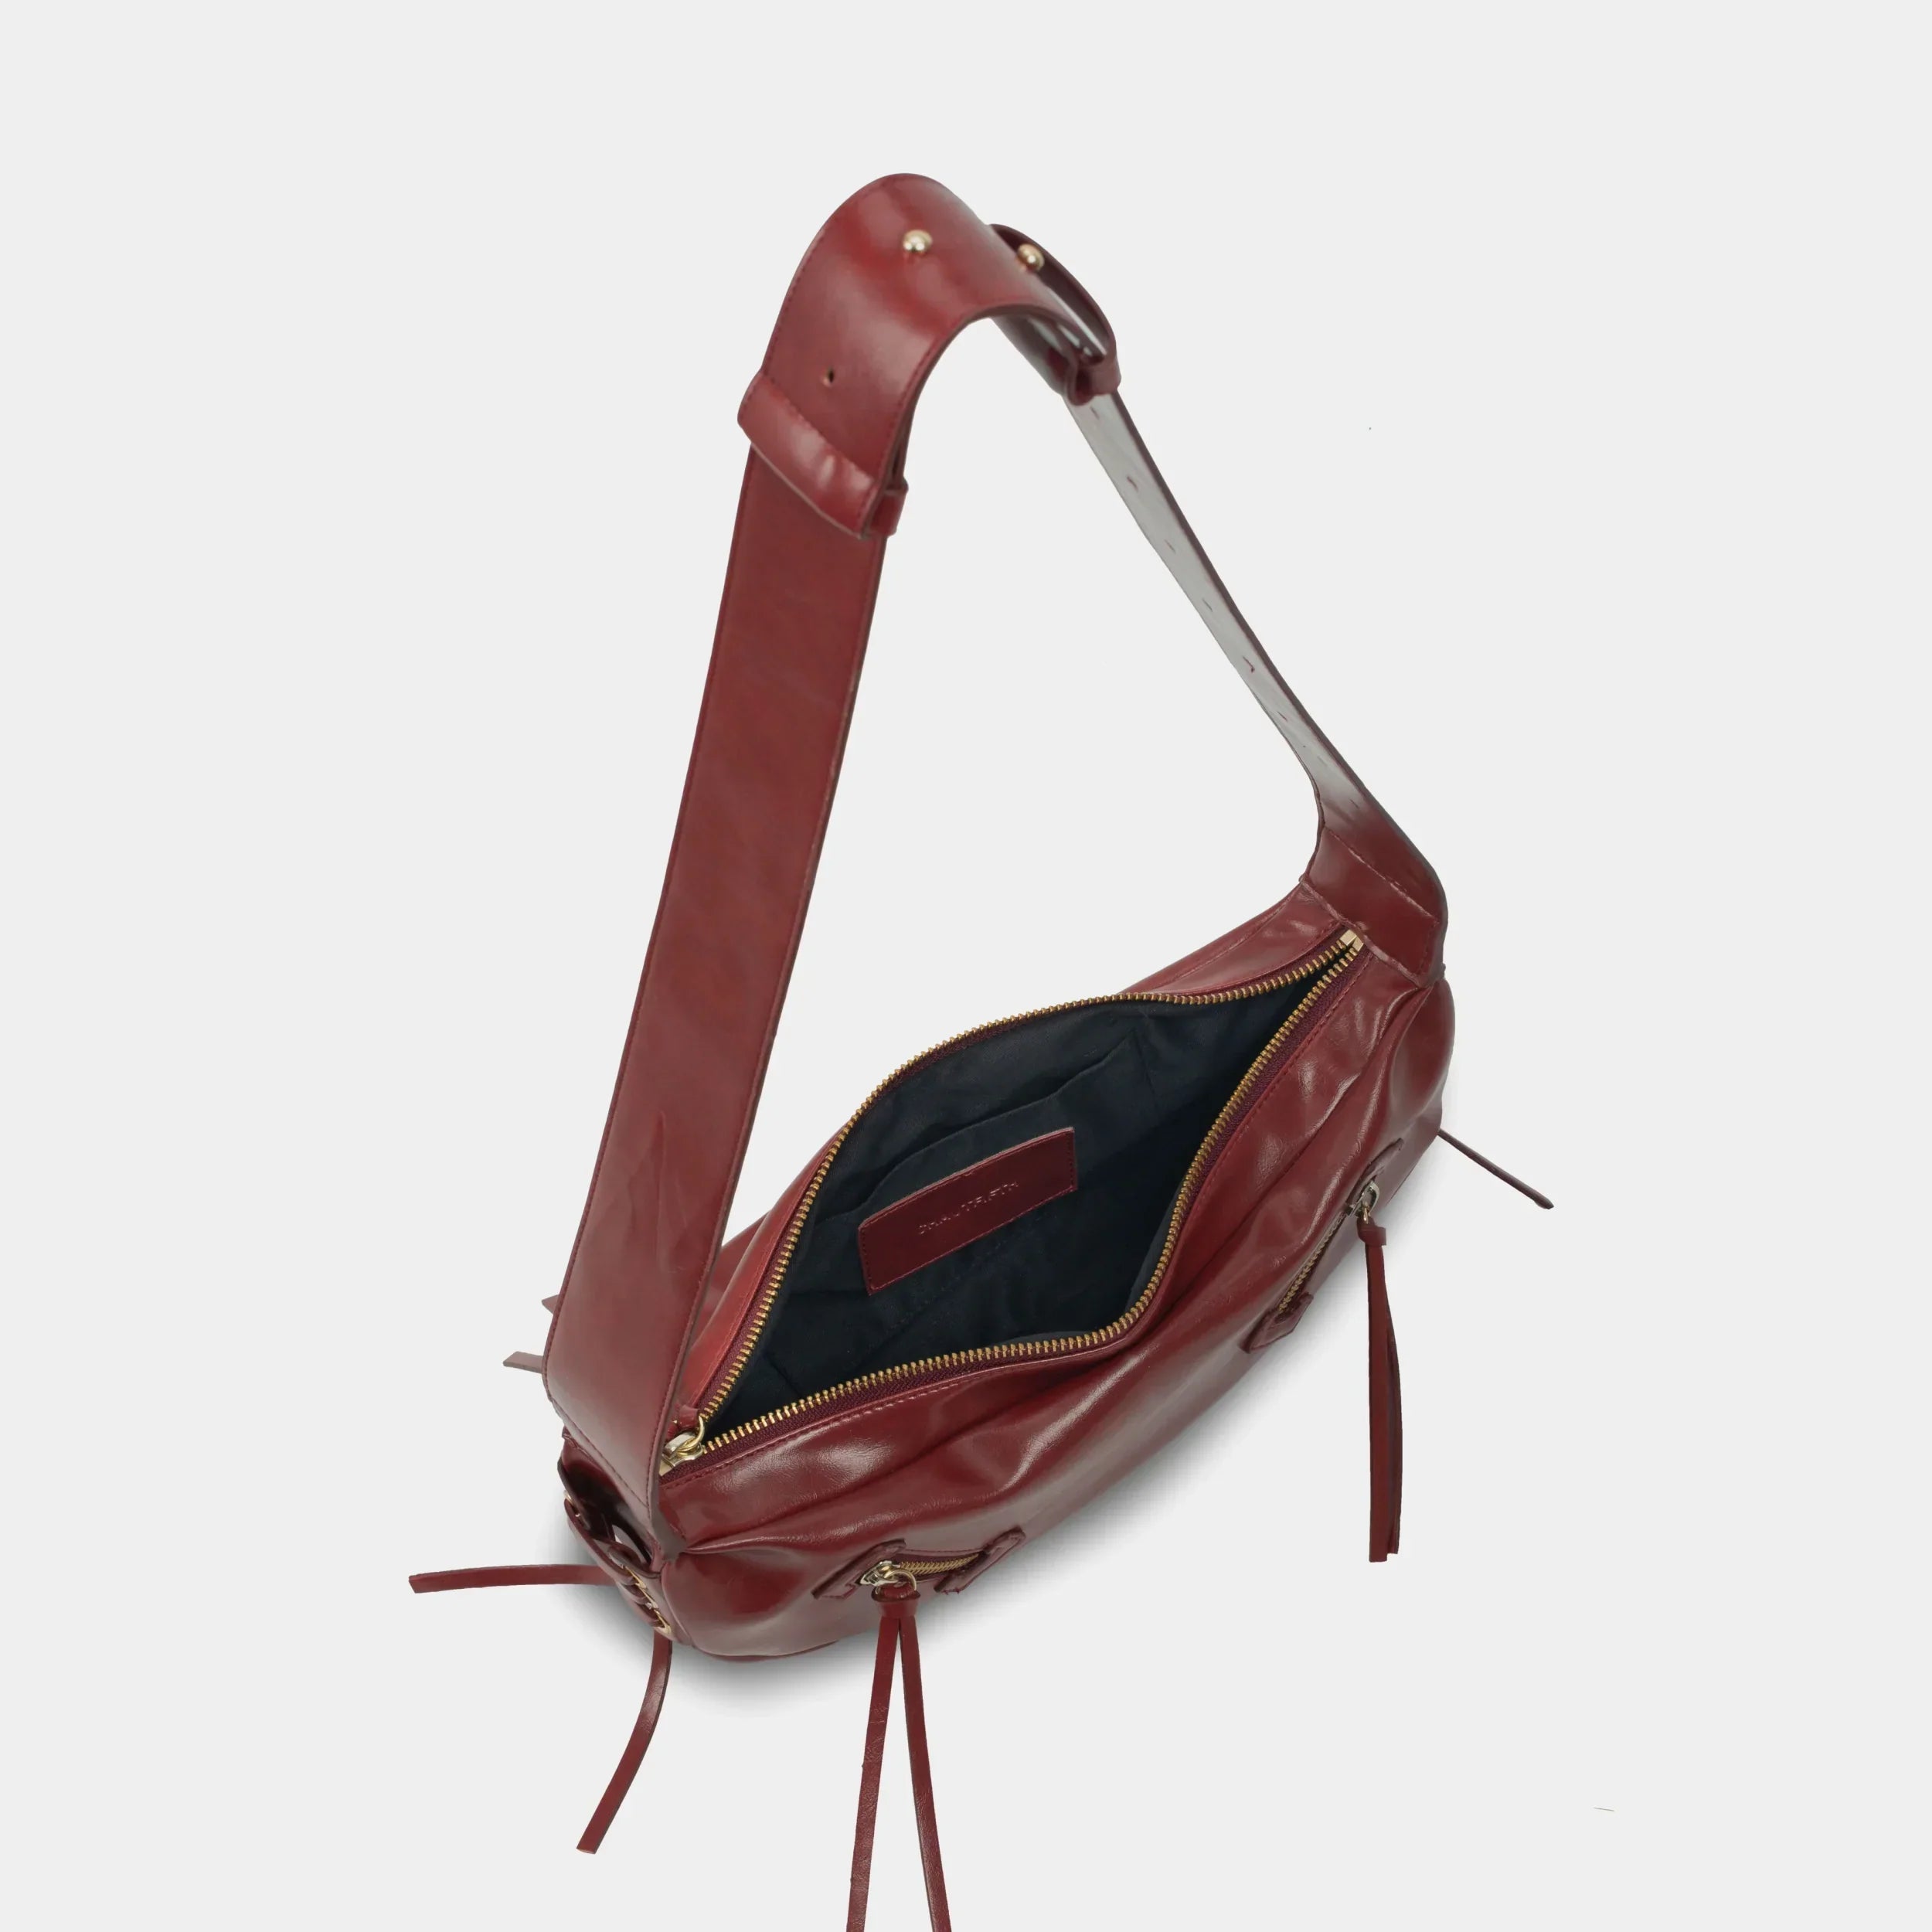 Túi xách LACE size lớn (M) màu hồng pastel